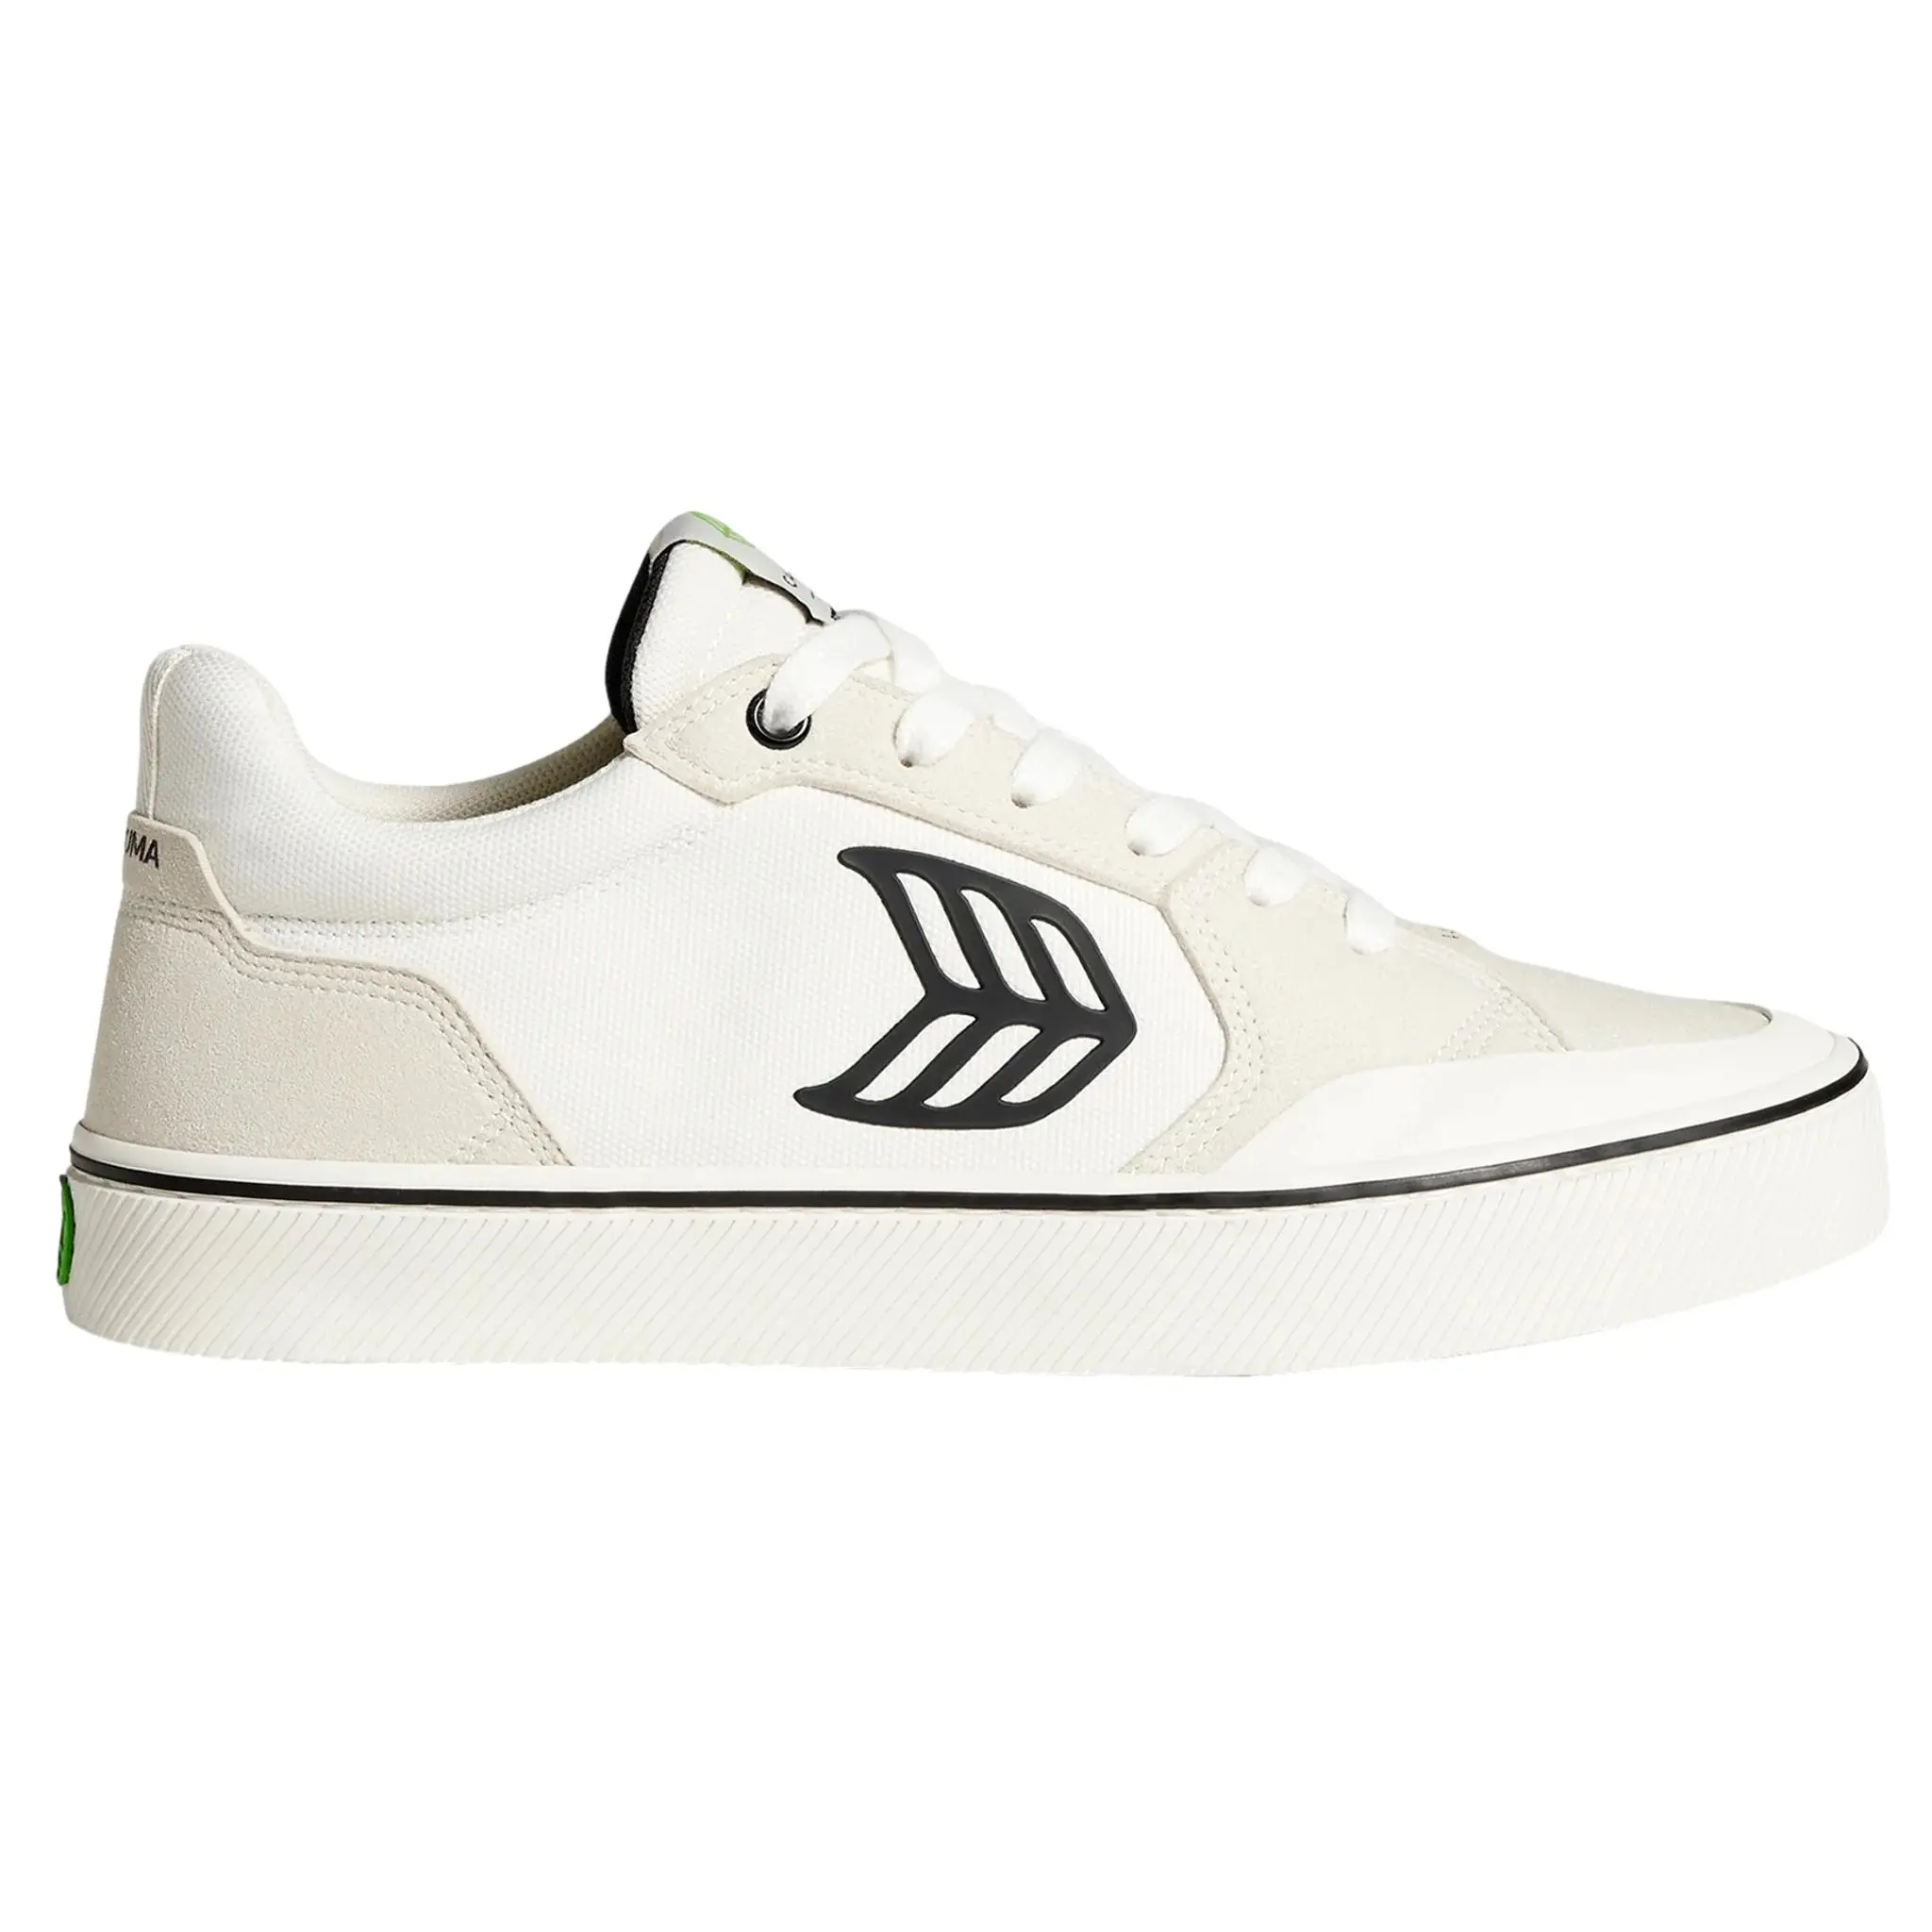 Cariuma shoes white Pro Skate vallely